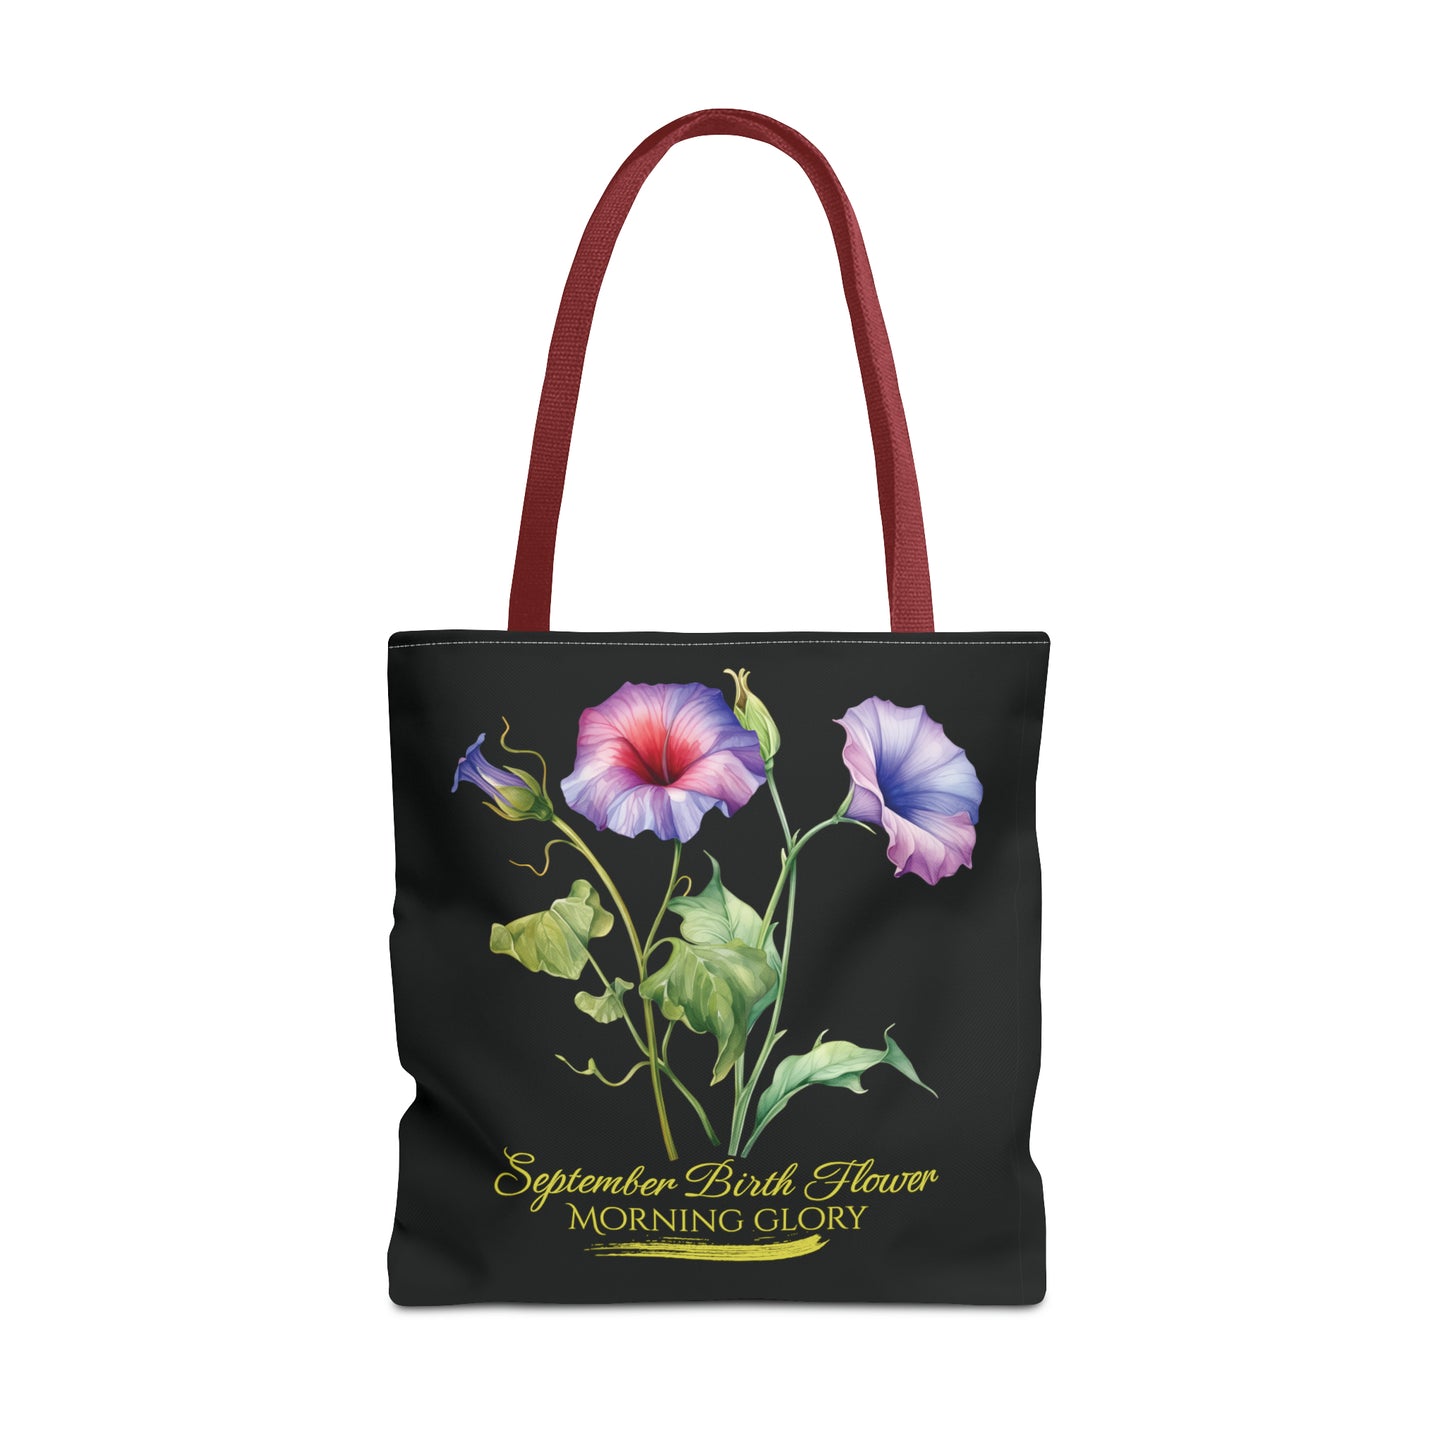 September Birth Flower: Morning Glory - Tote Bag (AOP)